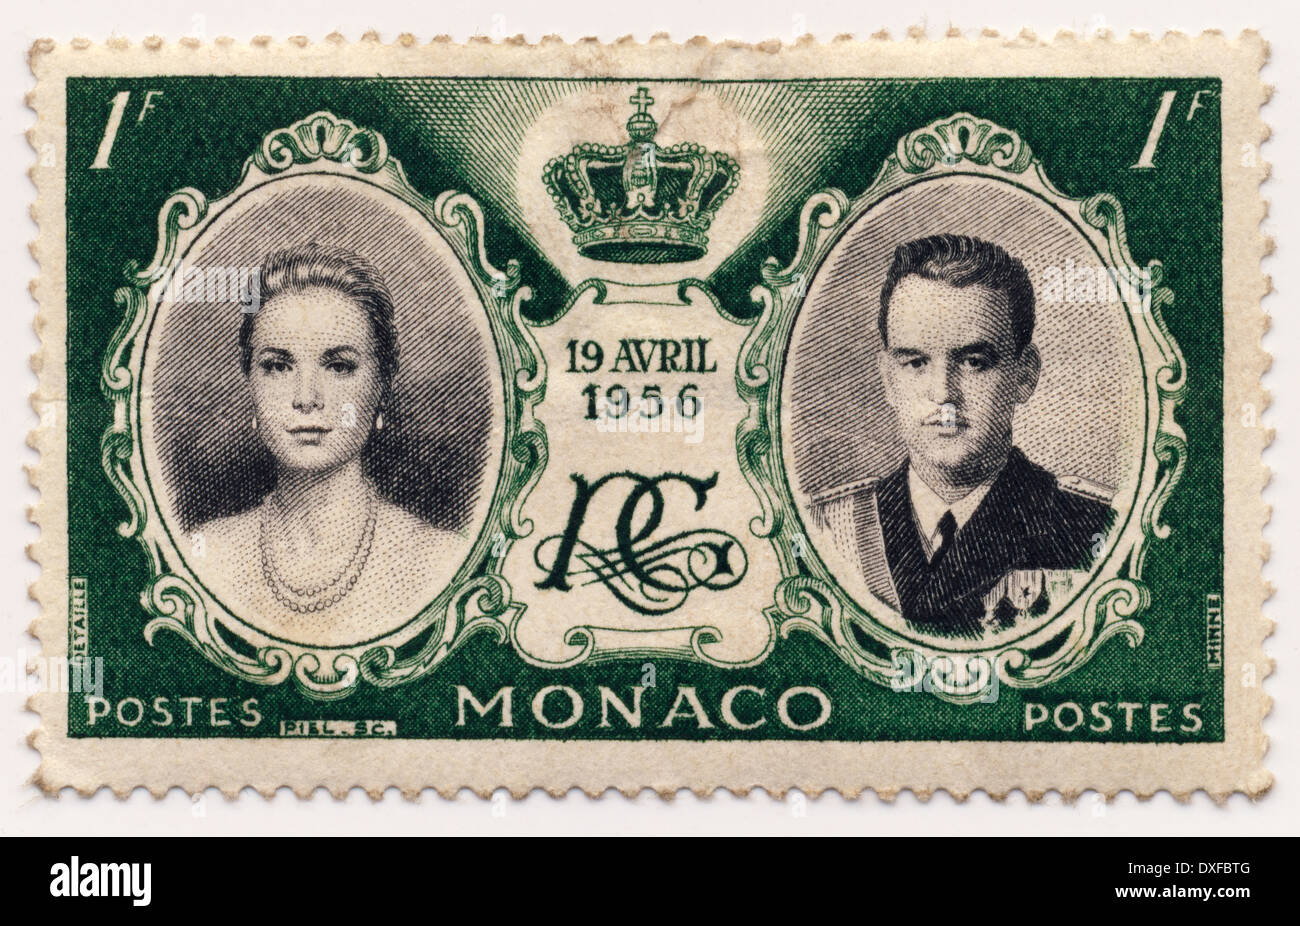 Postage stamp from Monaco Stock Photo